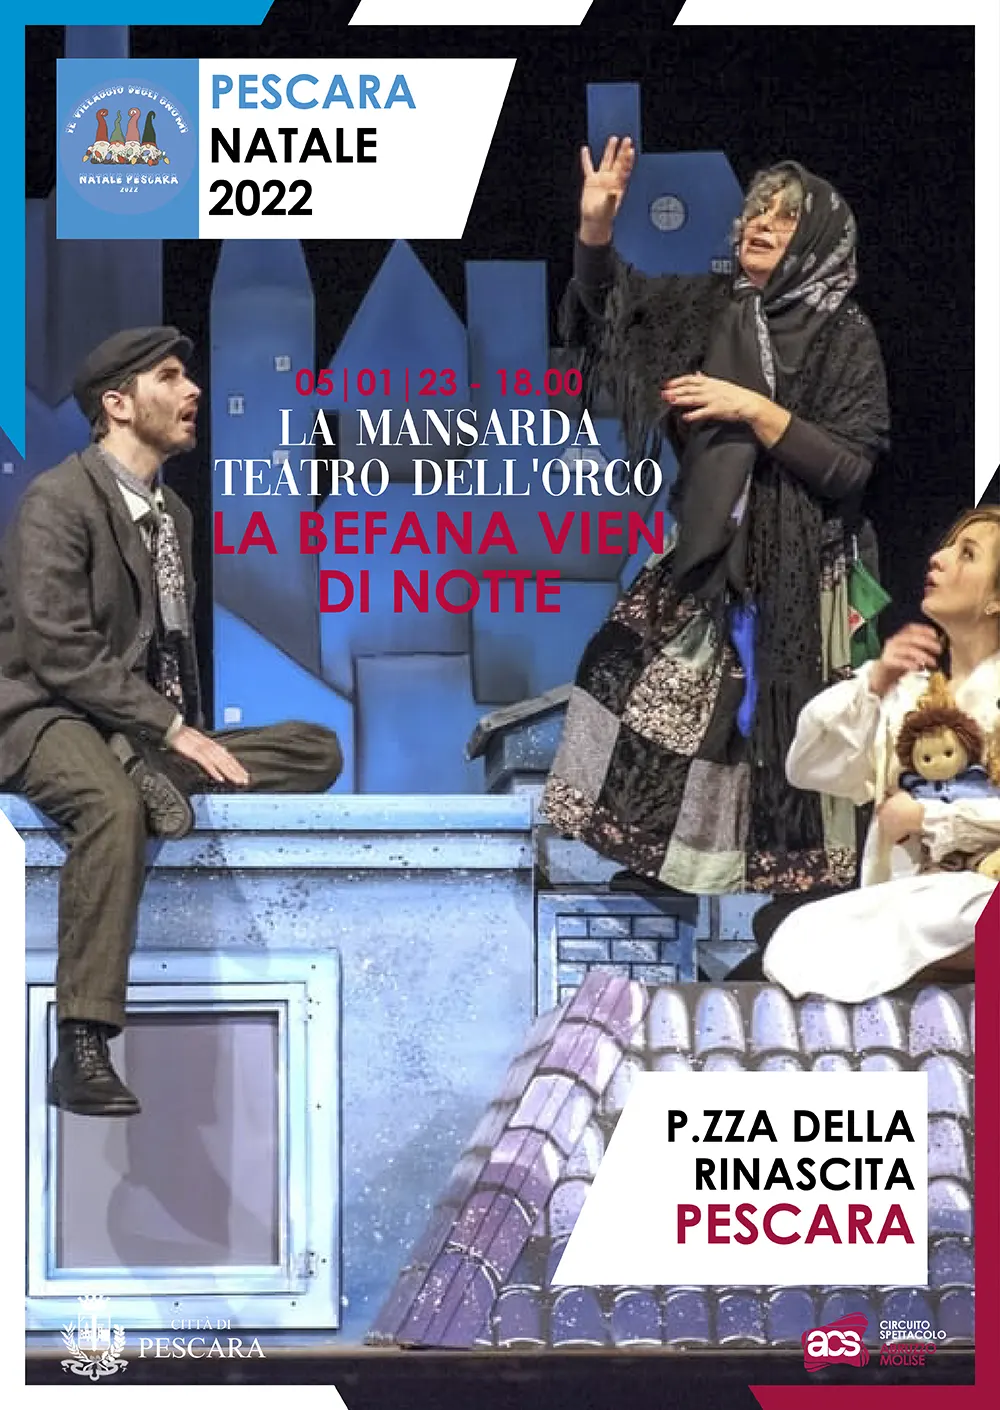 La befana vien di notte, La Mansarda - Teatro dell'Orco. Pescara il 5 gennaio 2023.